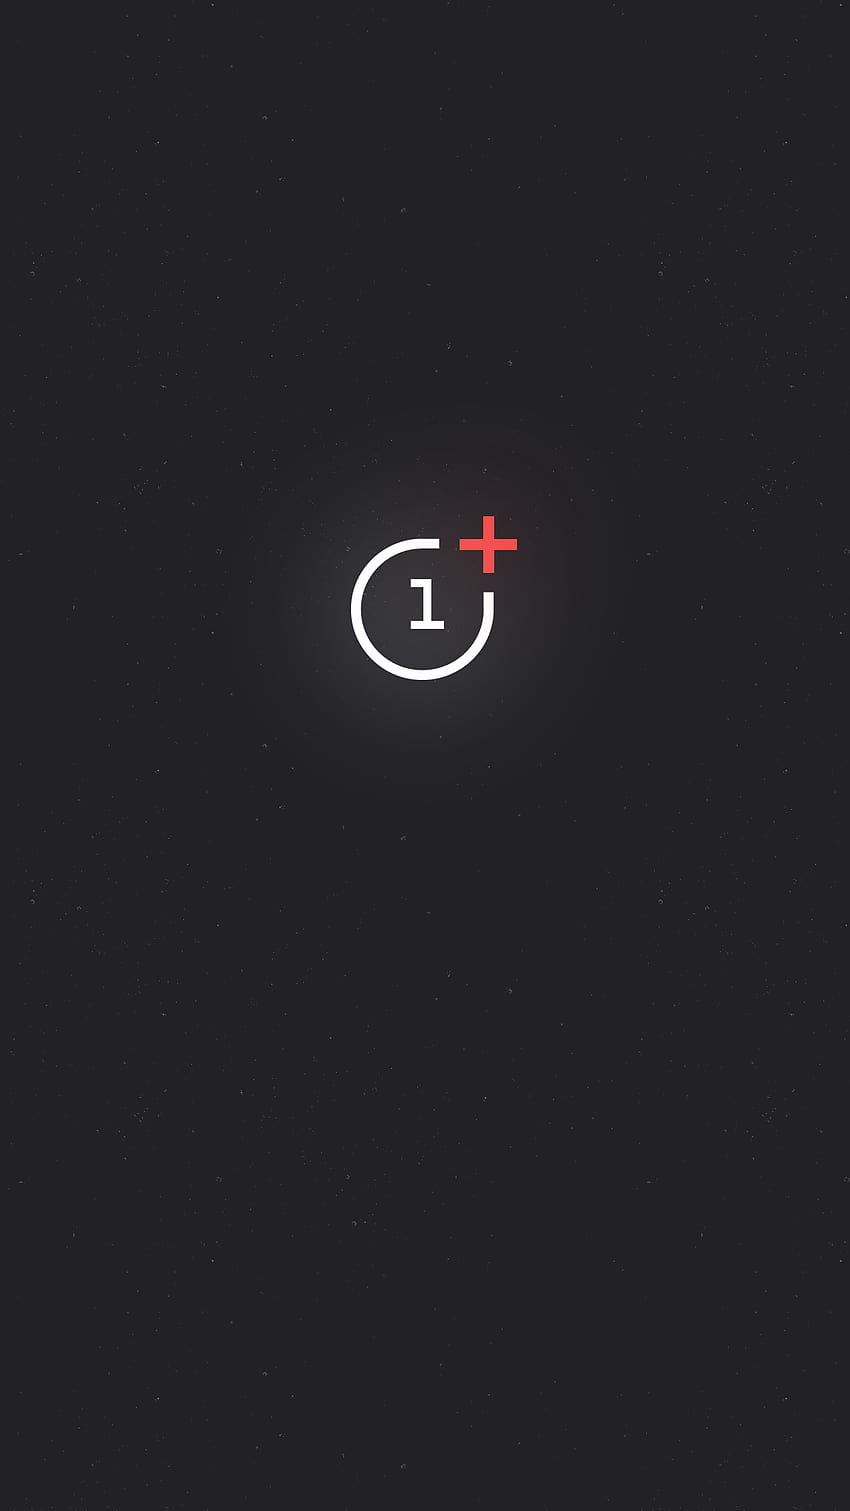 9 Logo OnePlus, oneplus 6t amoled negro fondo de pantalla del teléfono